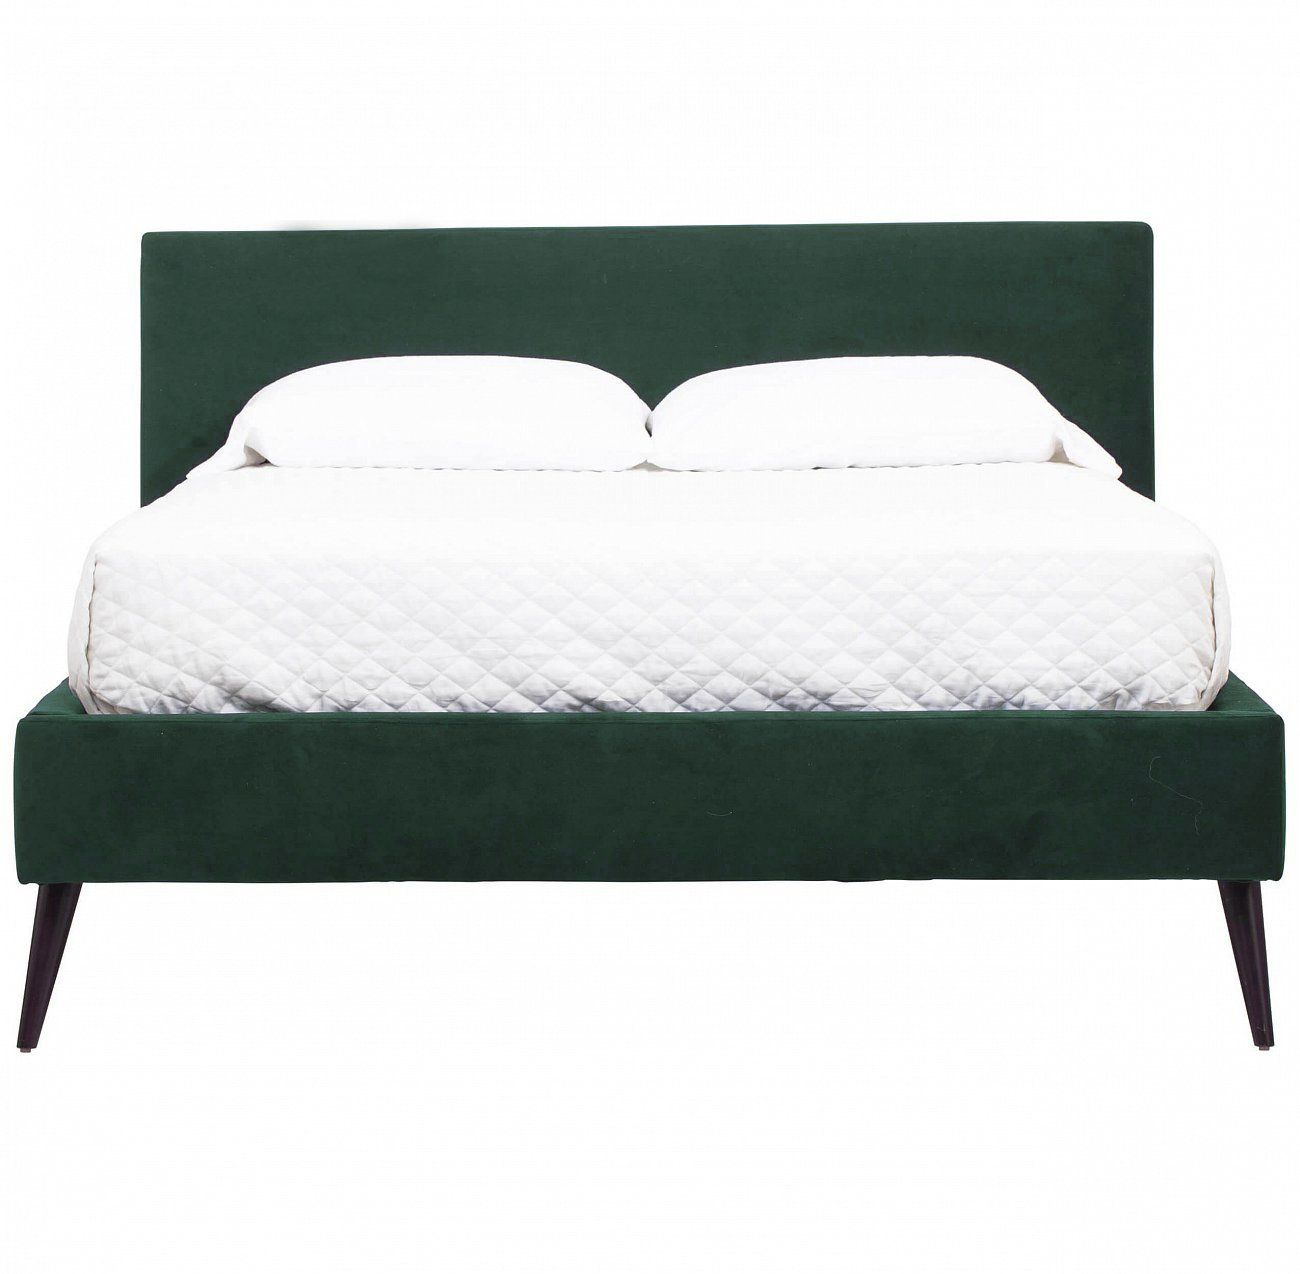 Double bed 160x200 cm green Pola